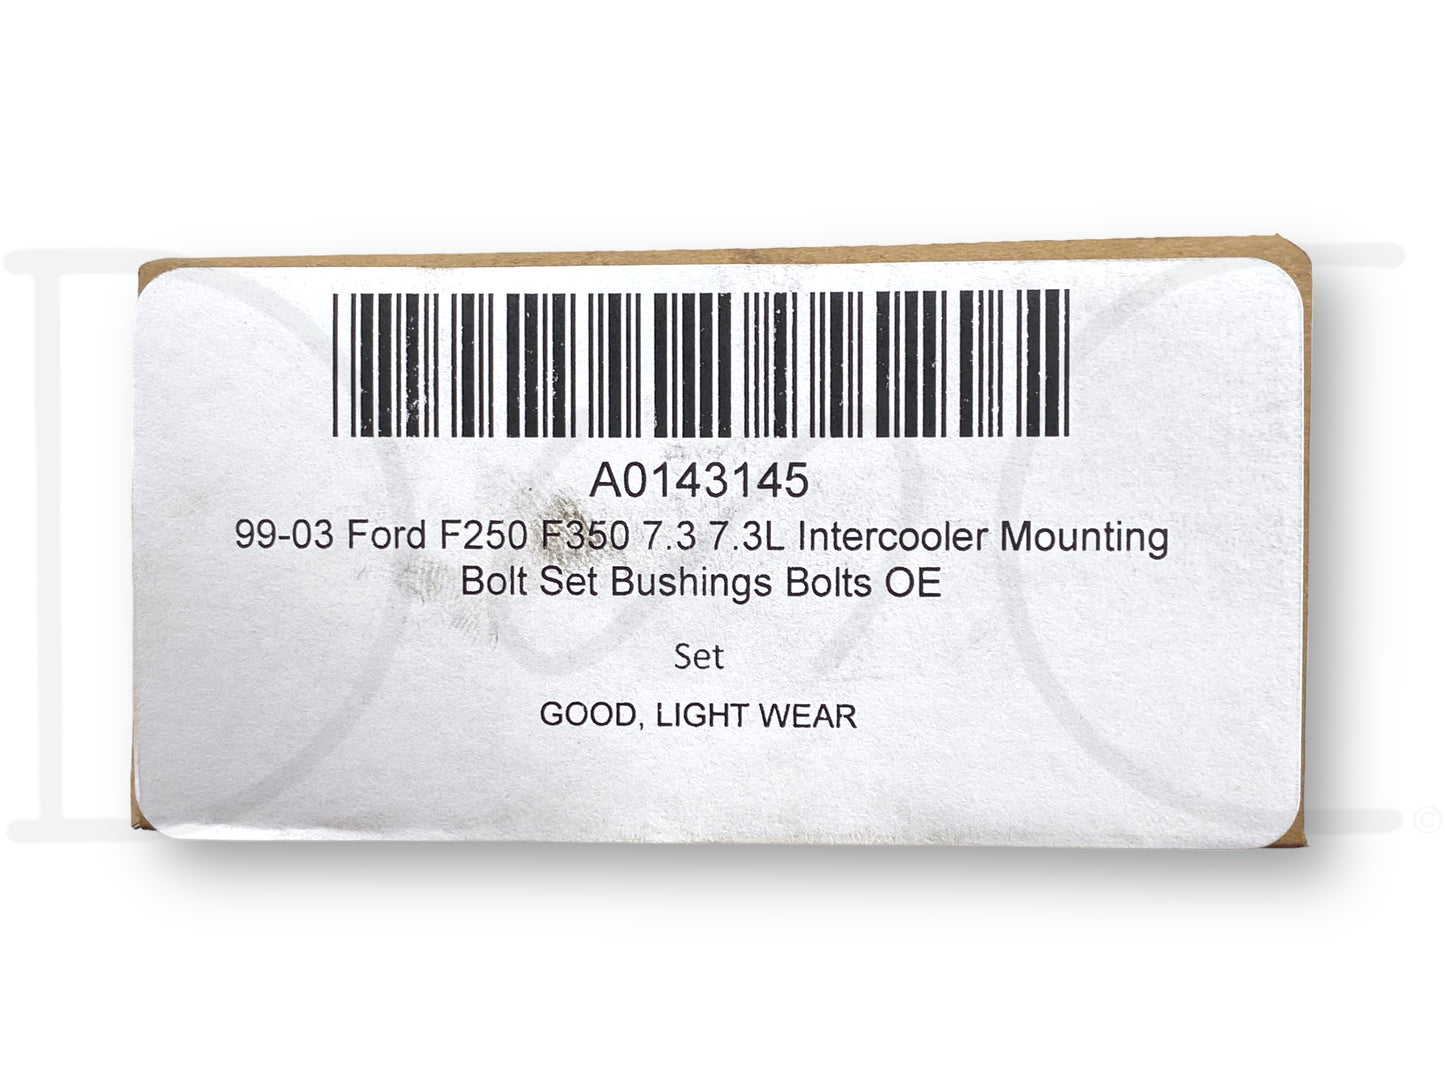 99-03 Ford F250 F350 7.3 7.3L Intercooler Mounting Bolt Set Bushings Bolts OE